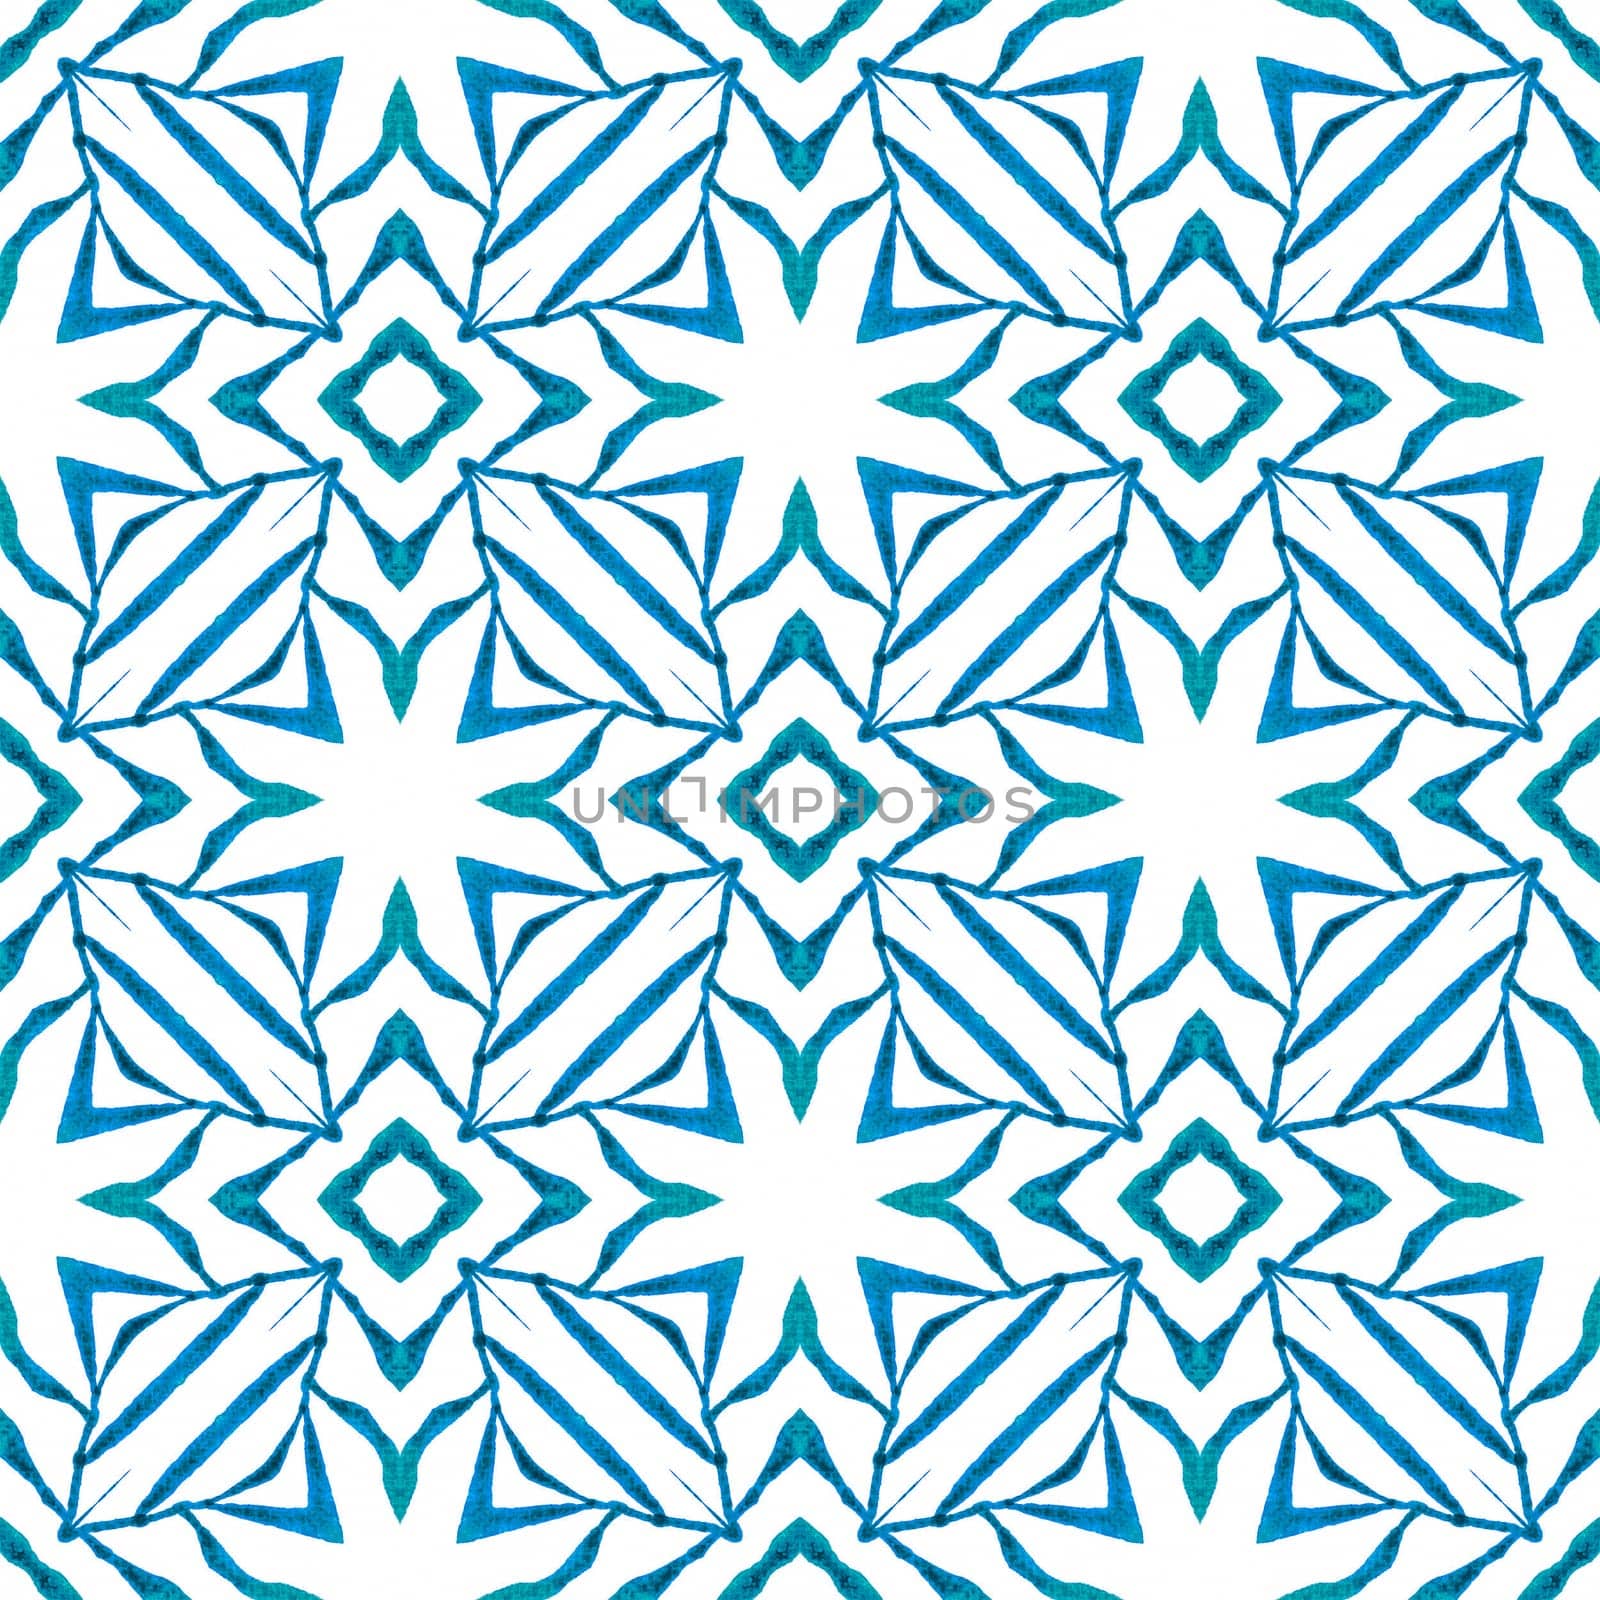 Organic tile. Blue magnetic boho chic summer by beginagain